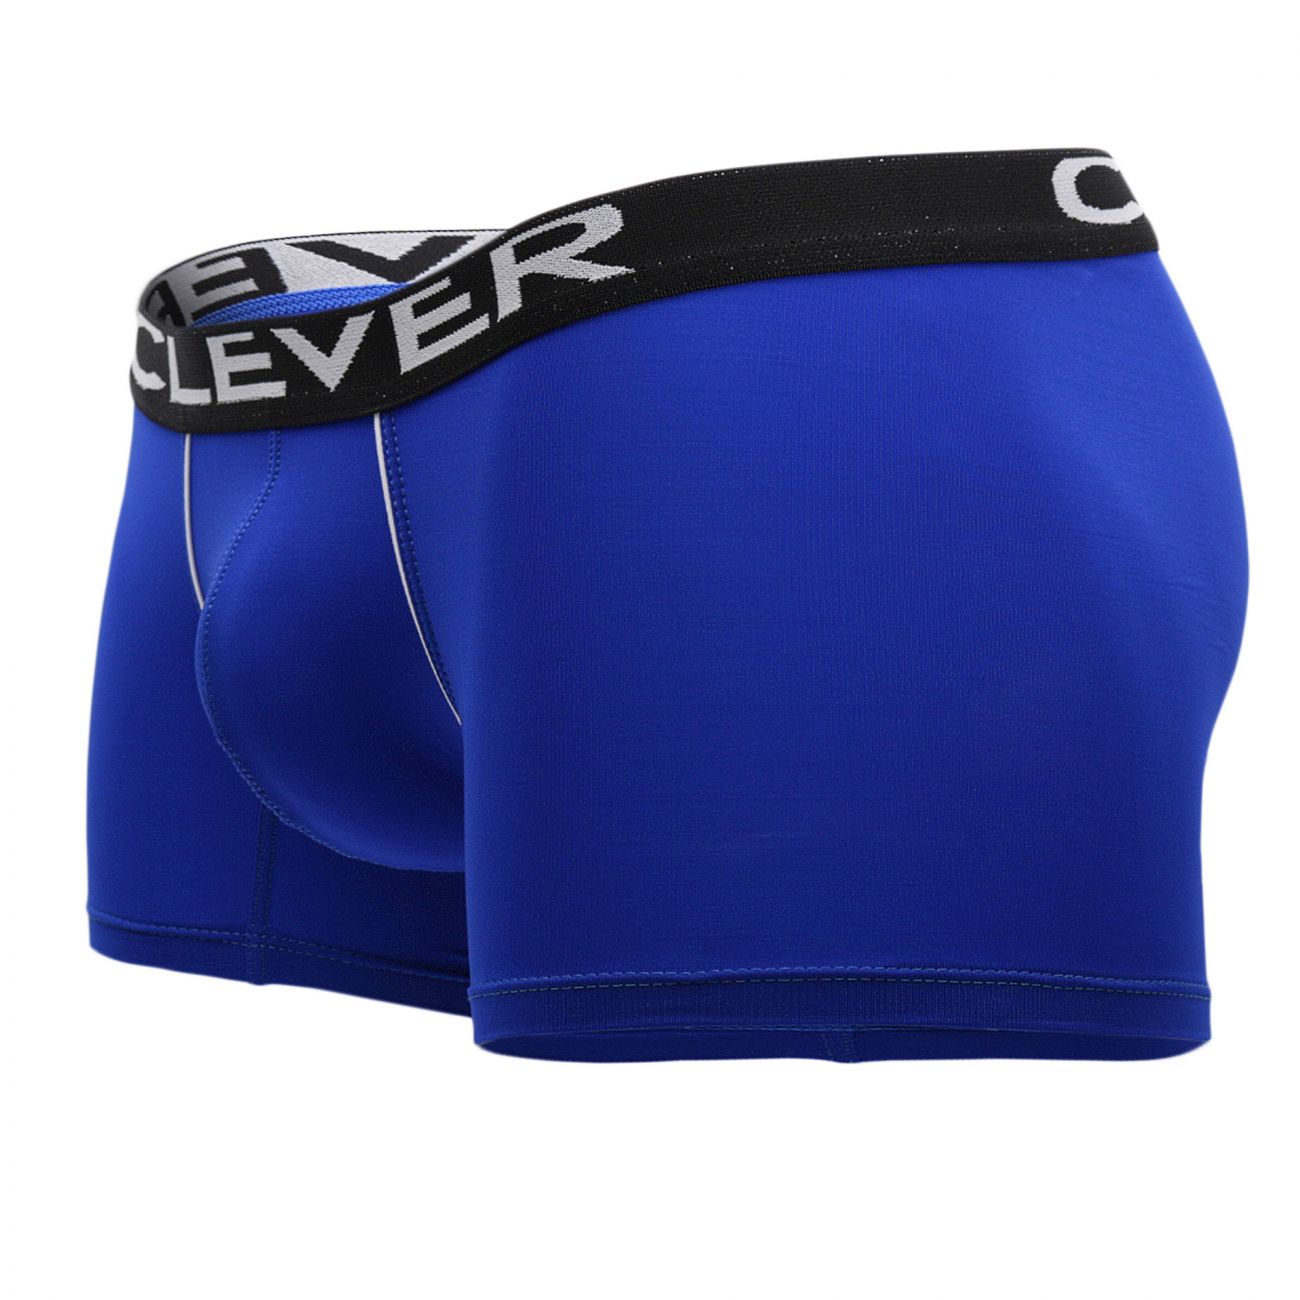 Clever 2407 Filipo Boxer Briefs Color Blue